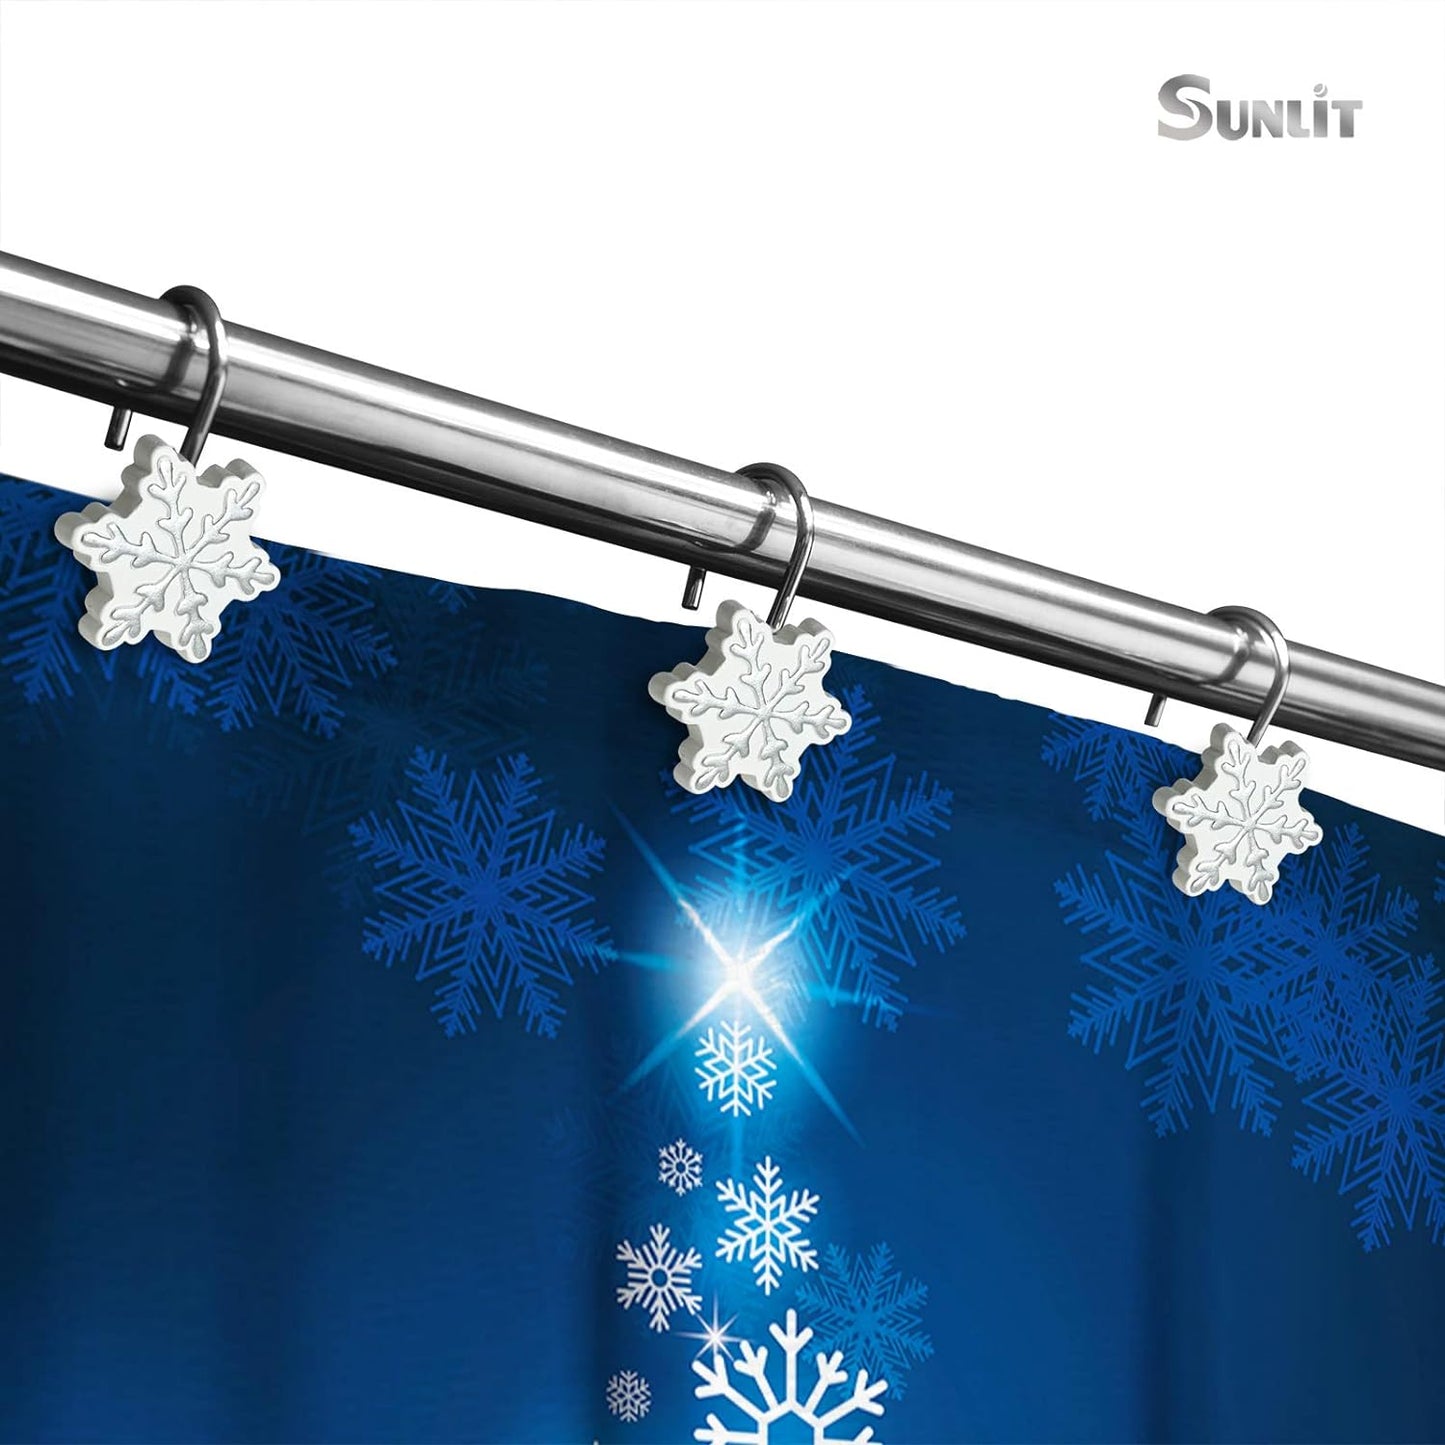 Sunlit Christmas Shower Curtain Hooks Snowflakes Shower Curtain Rings, Resin, White and Light Blue Christmas Decor, Winter Bathroom Decoration - 12 Pack